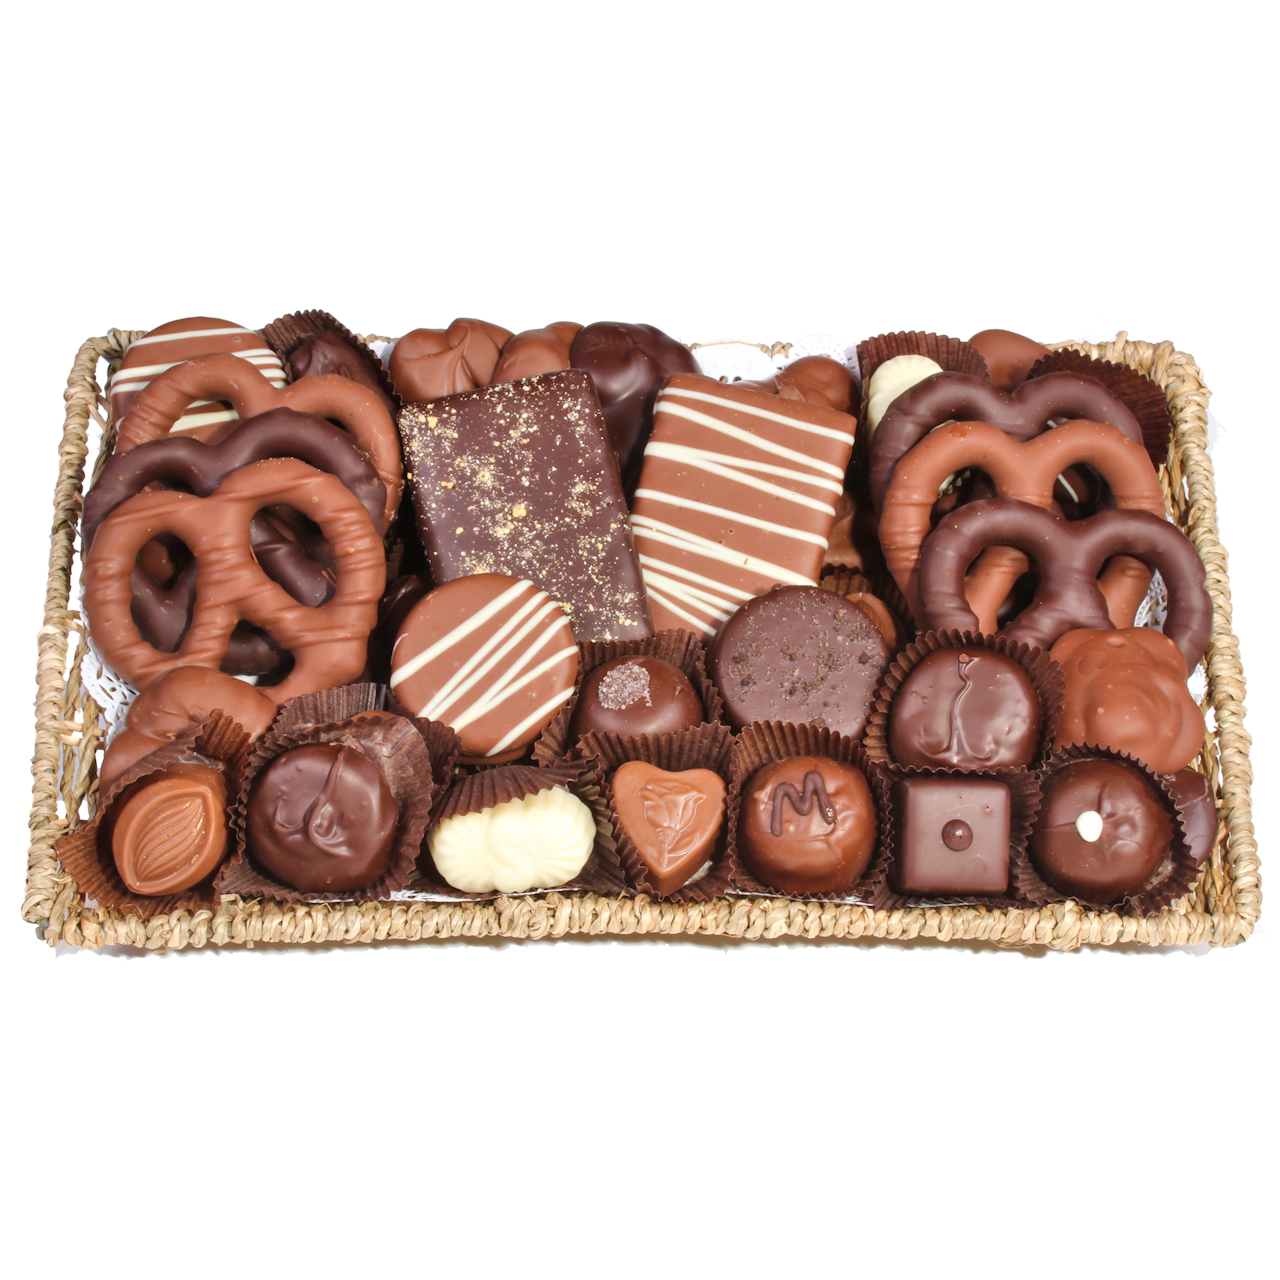 Gourmet Chocolates & Truffles Platter